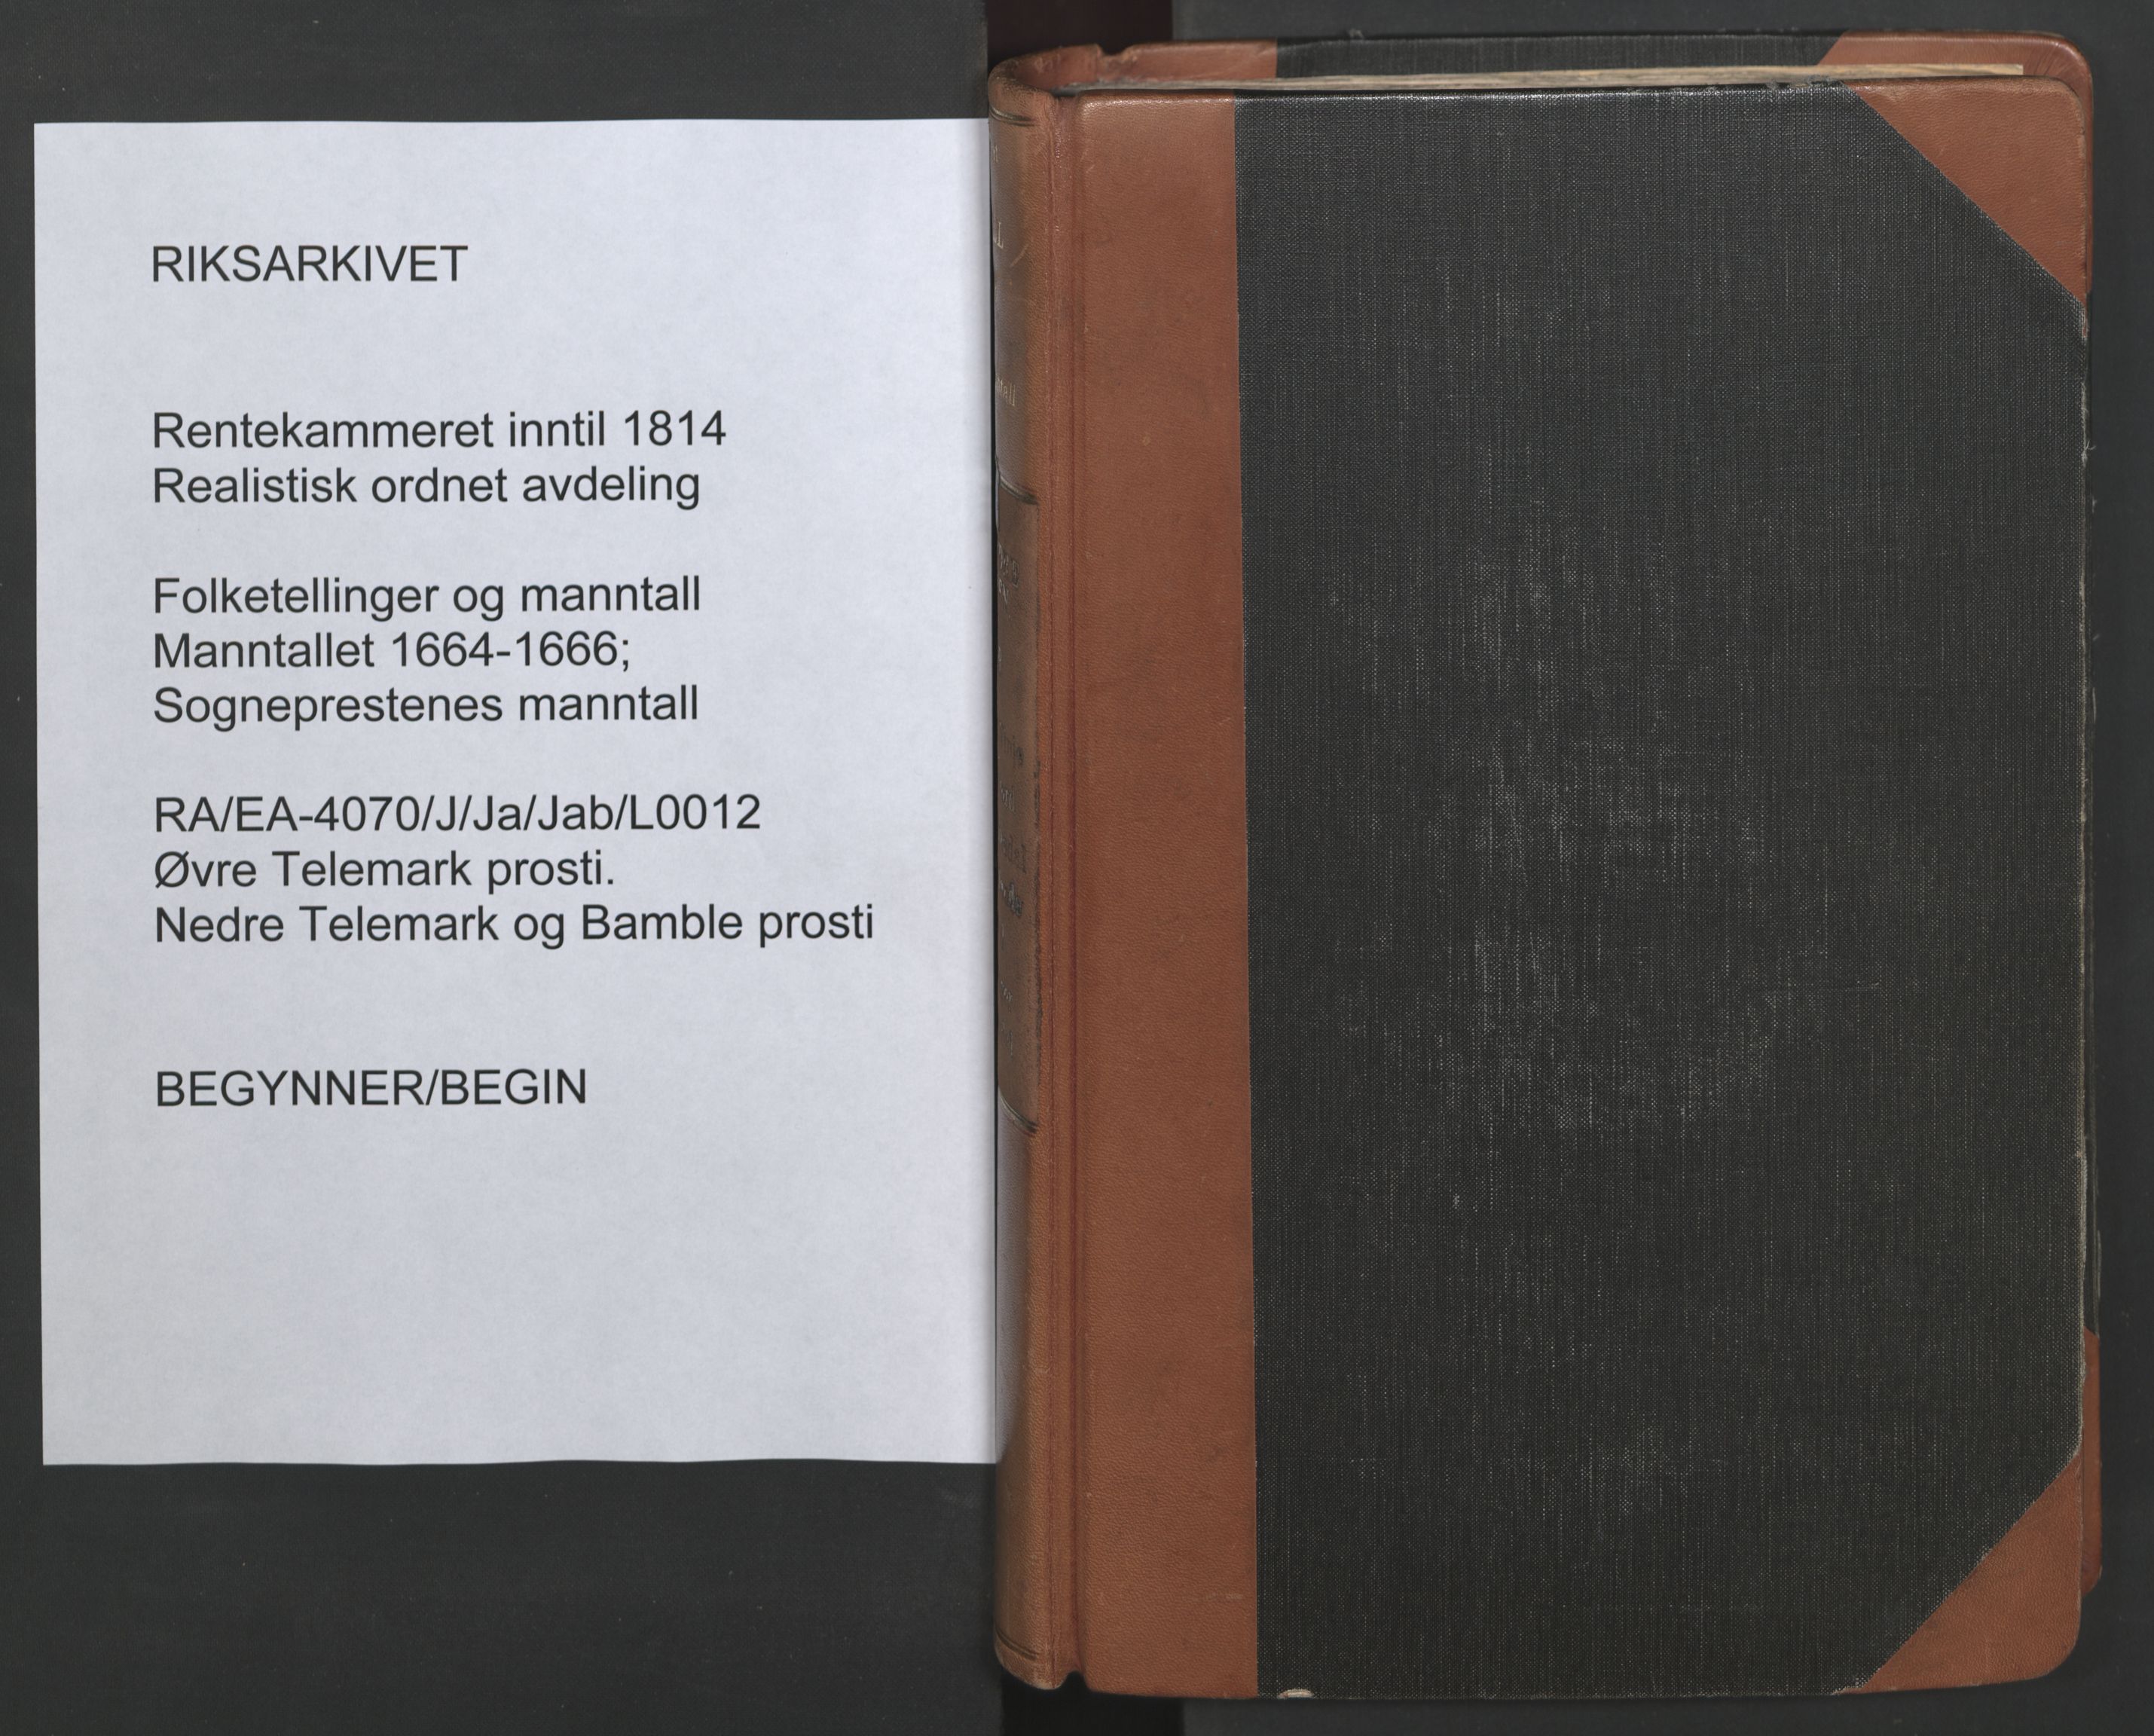 RA, Sogneprestenes manntall 1664-1666, nr. 12: Øvre Telemark prosti, Nedre Telemark prosti og Bamble prosti, 1664-1666